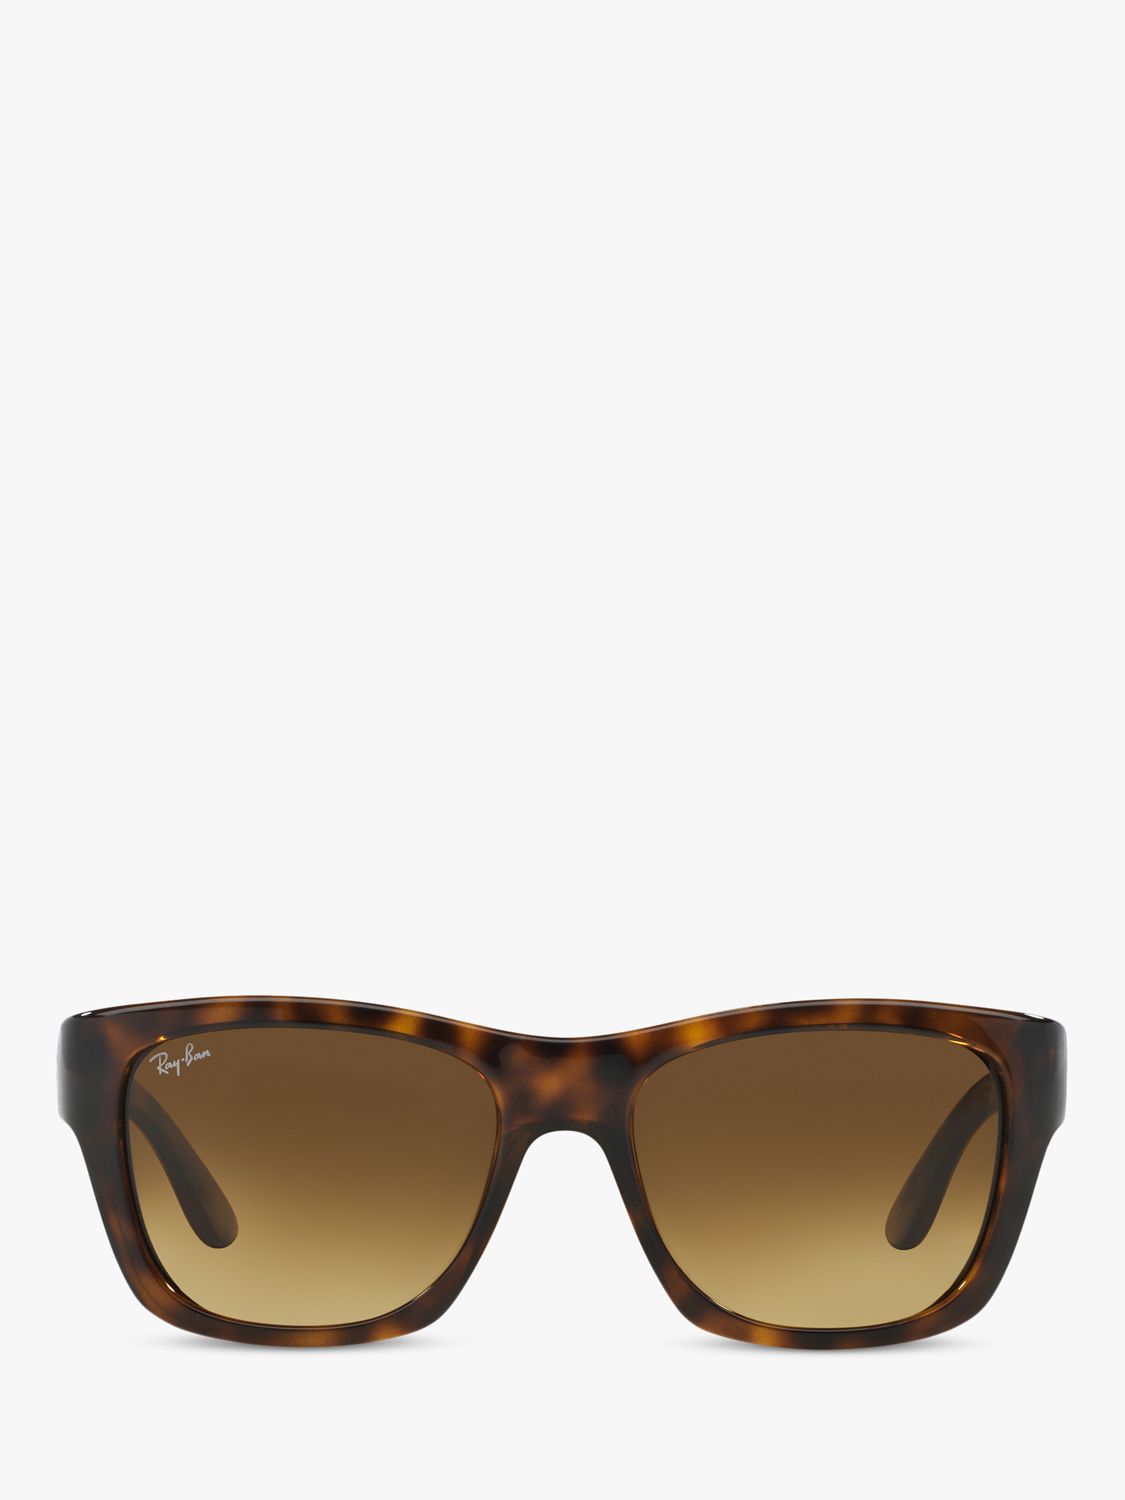 Ray-Ban RB4194 Unisex Square Sunglasses, Havana/Brown Gradient